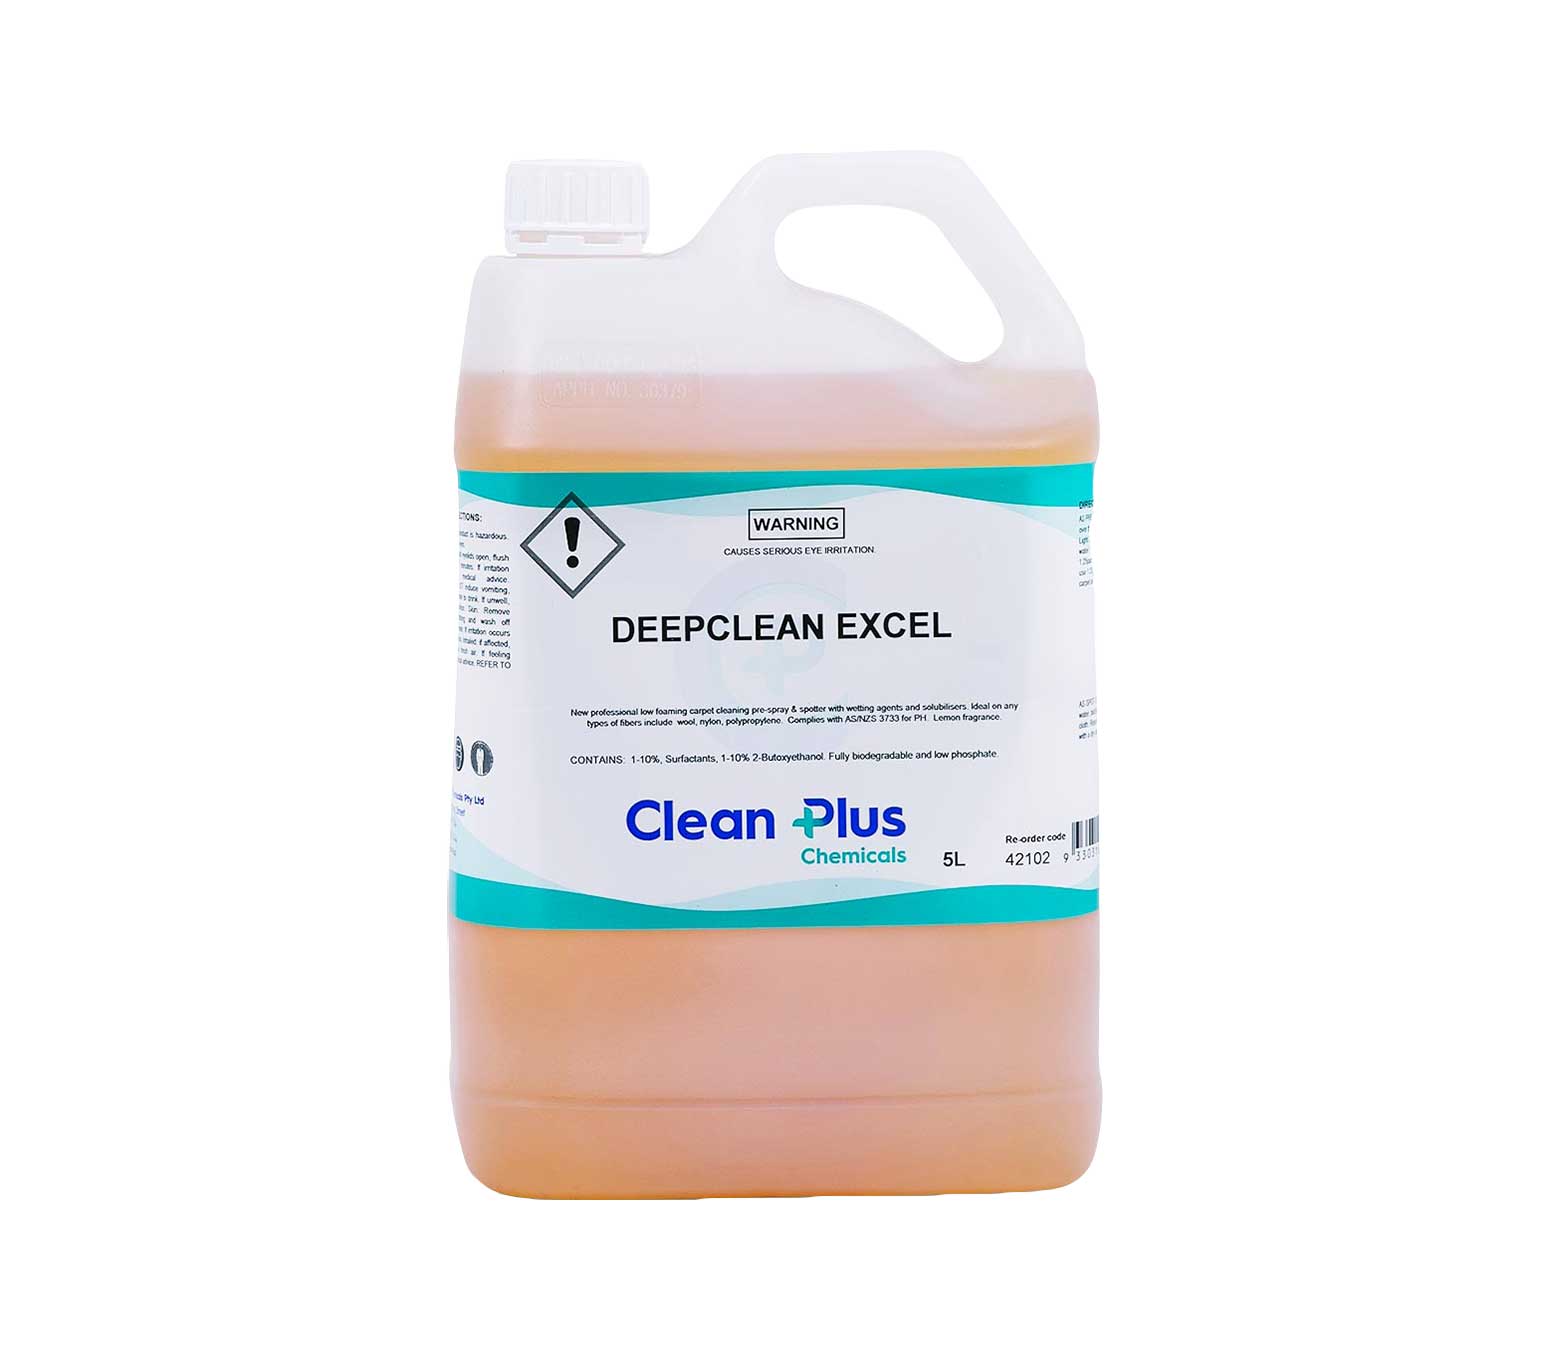 Deepclean Excel - Pre-Spray & Spotter.